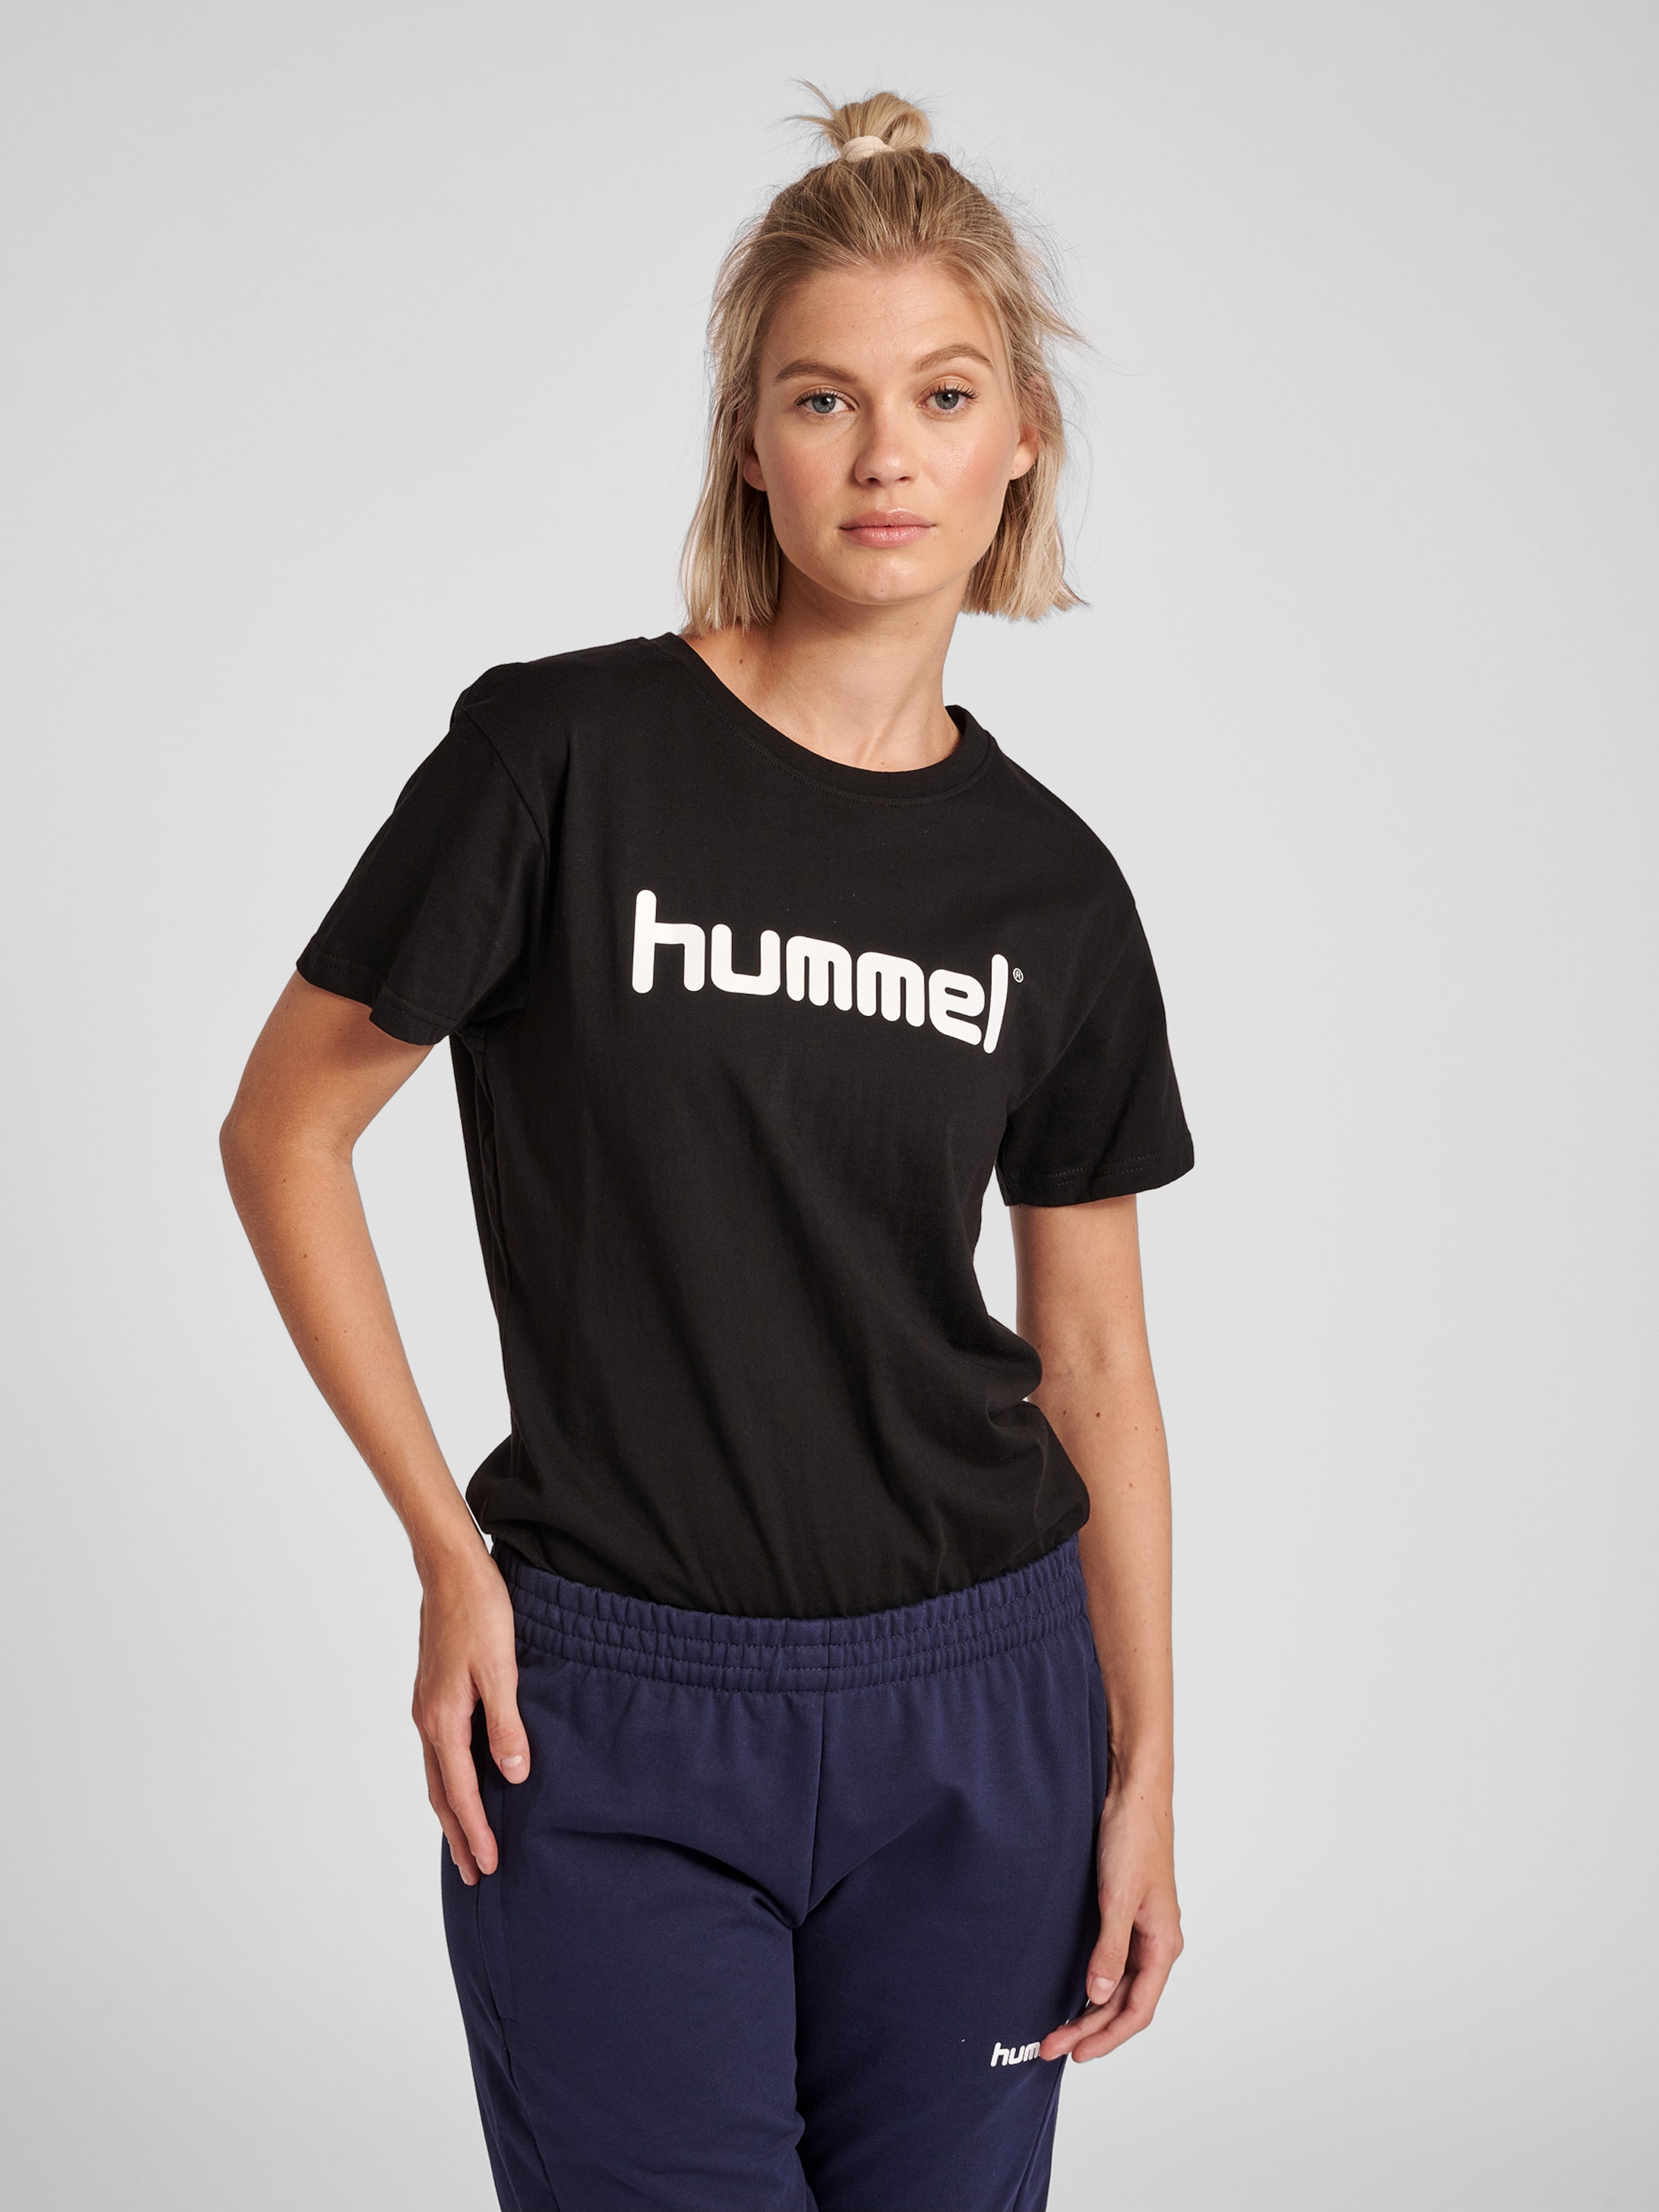 Frauen Sportarten Hummel Trainingsshirt in Schwarz - WB66798